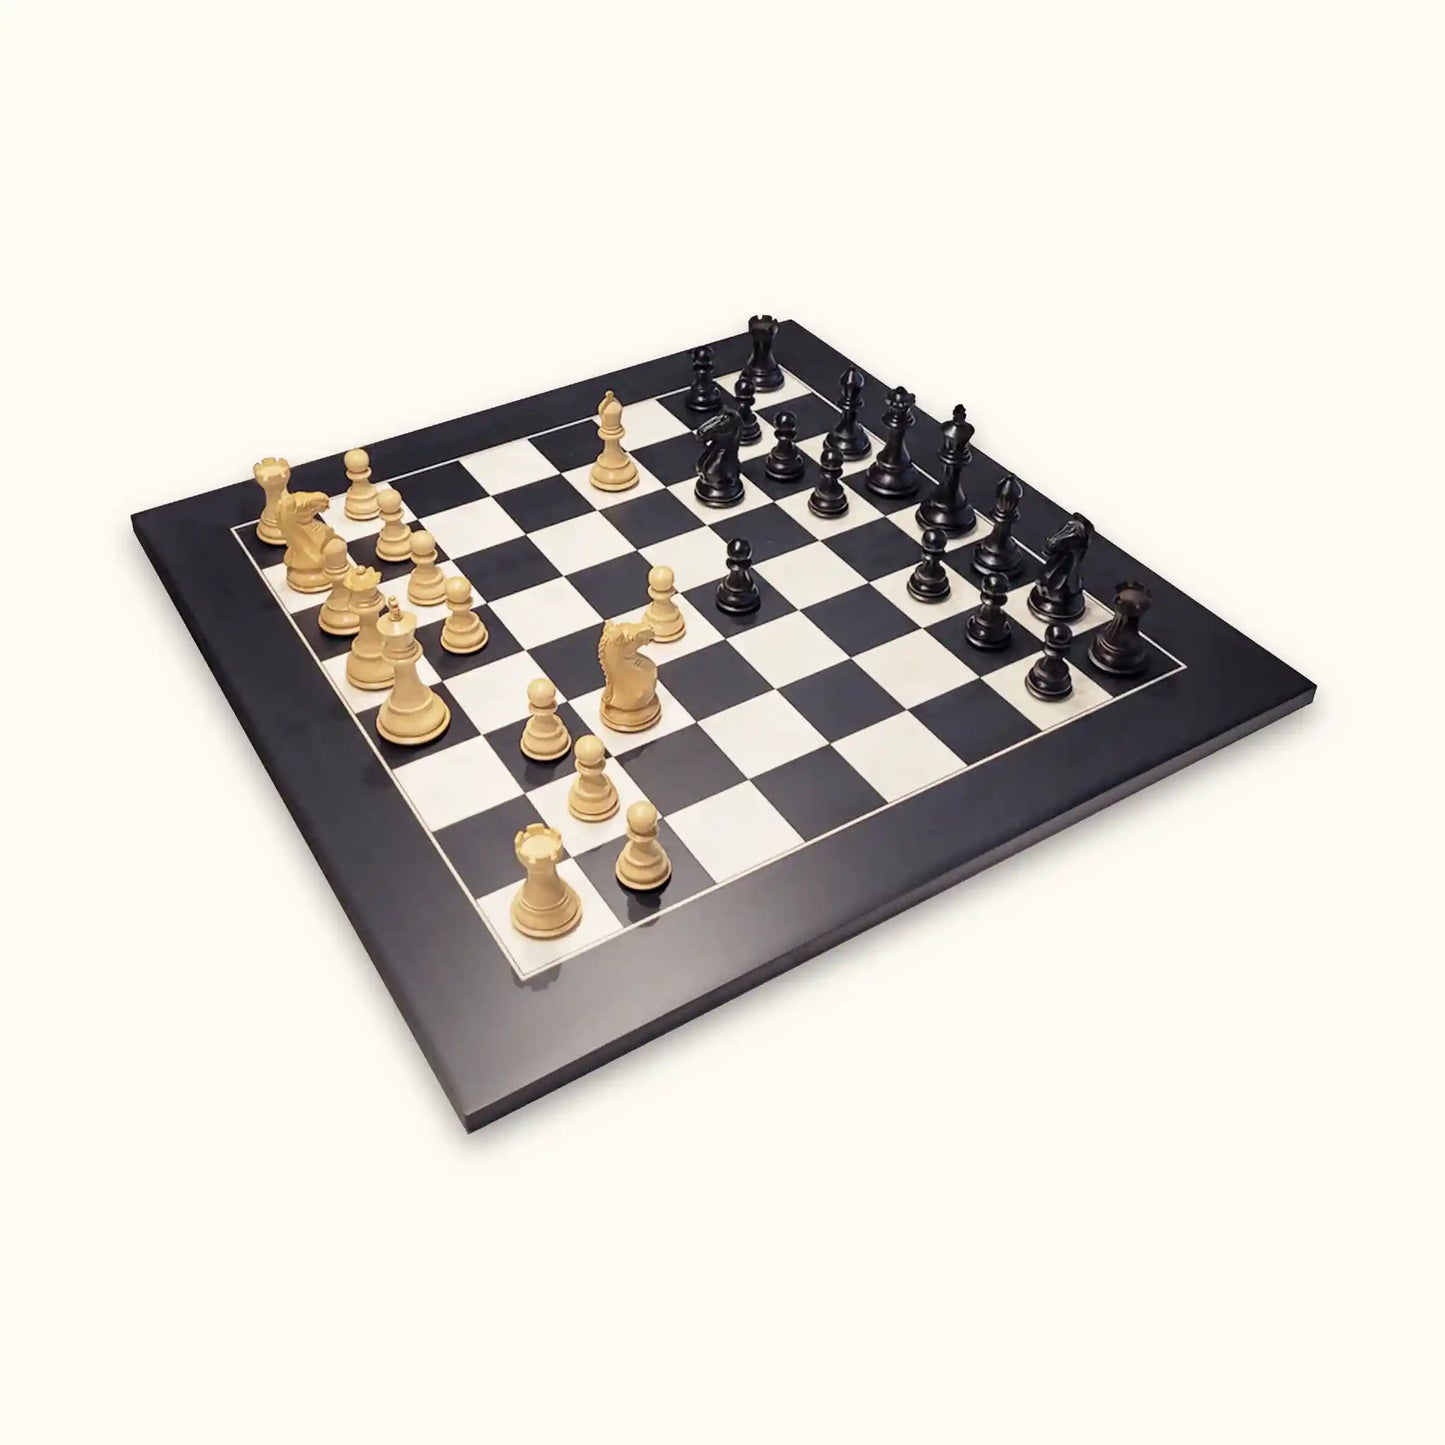 Chess pieces supreme black on black chessboard diagonal